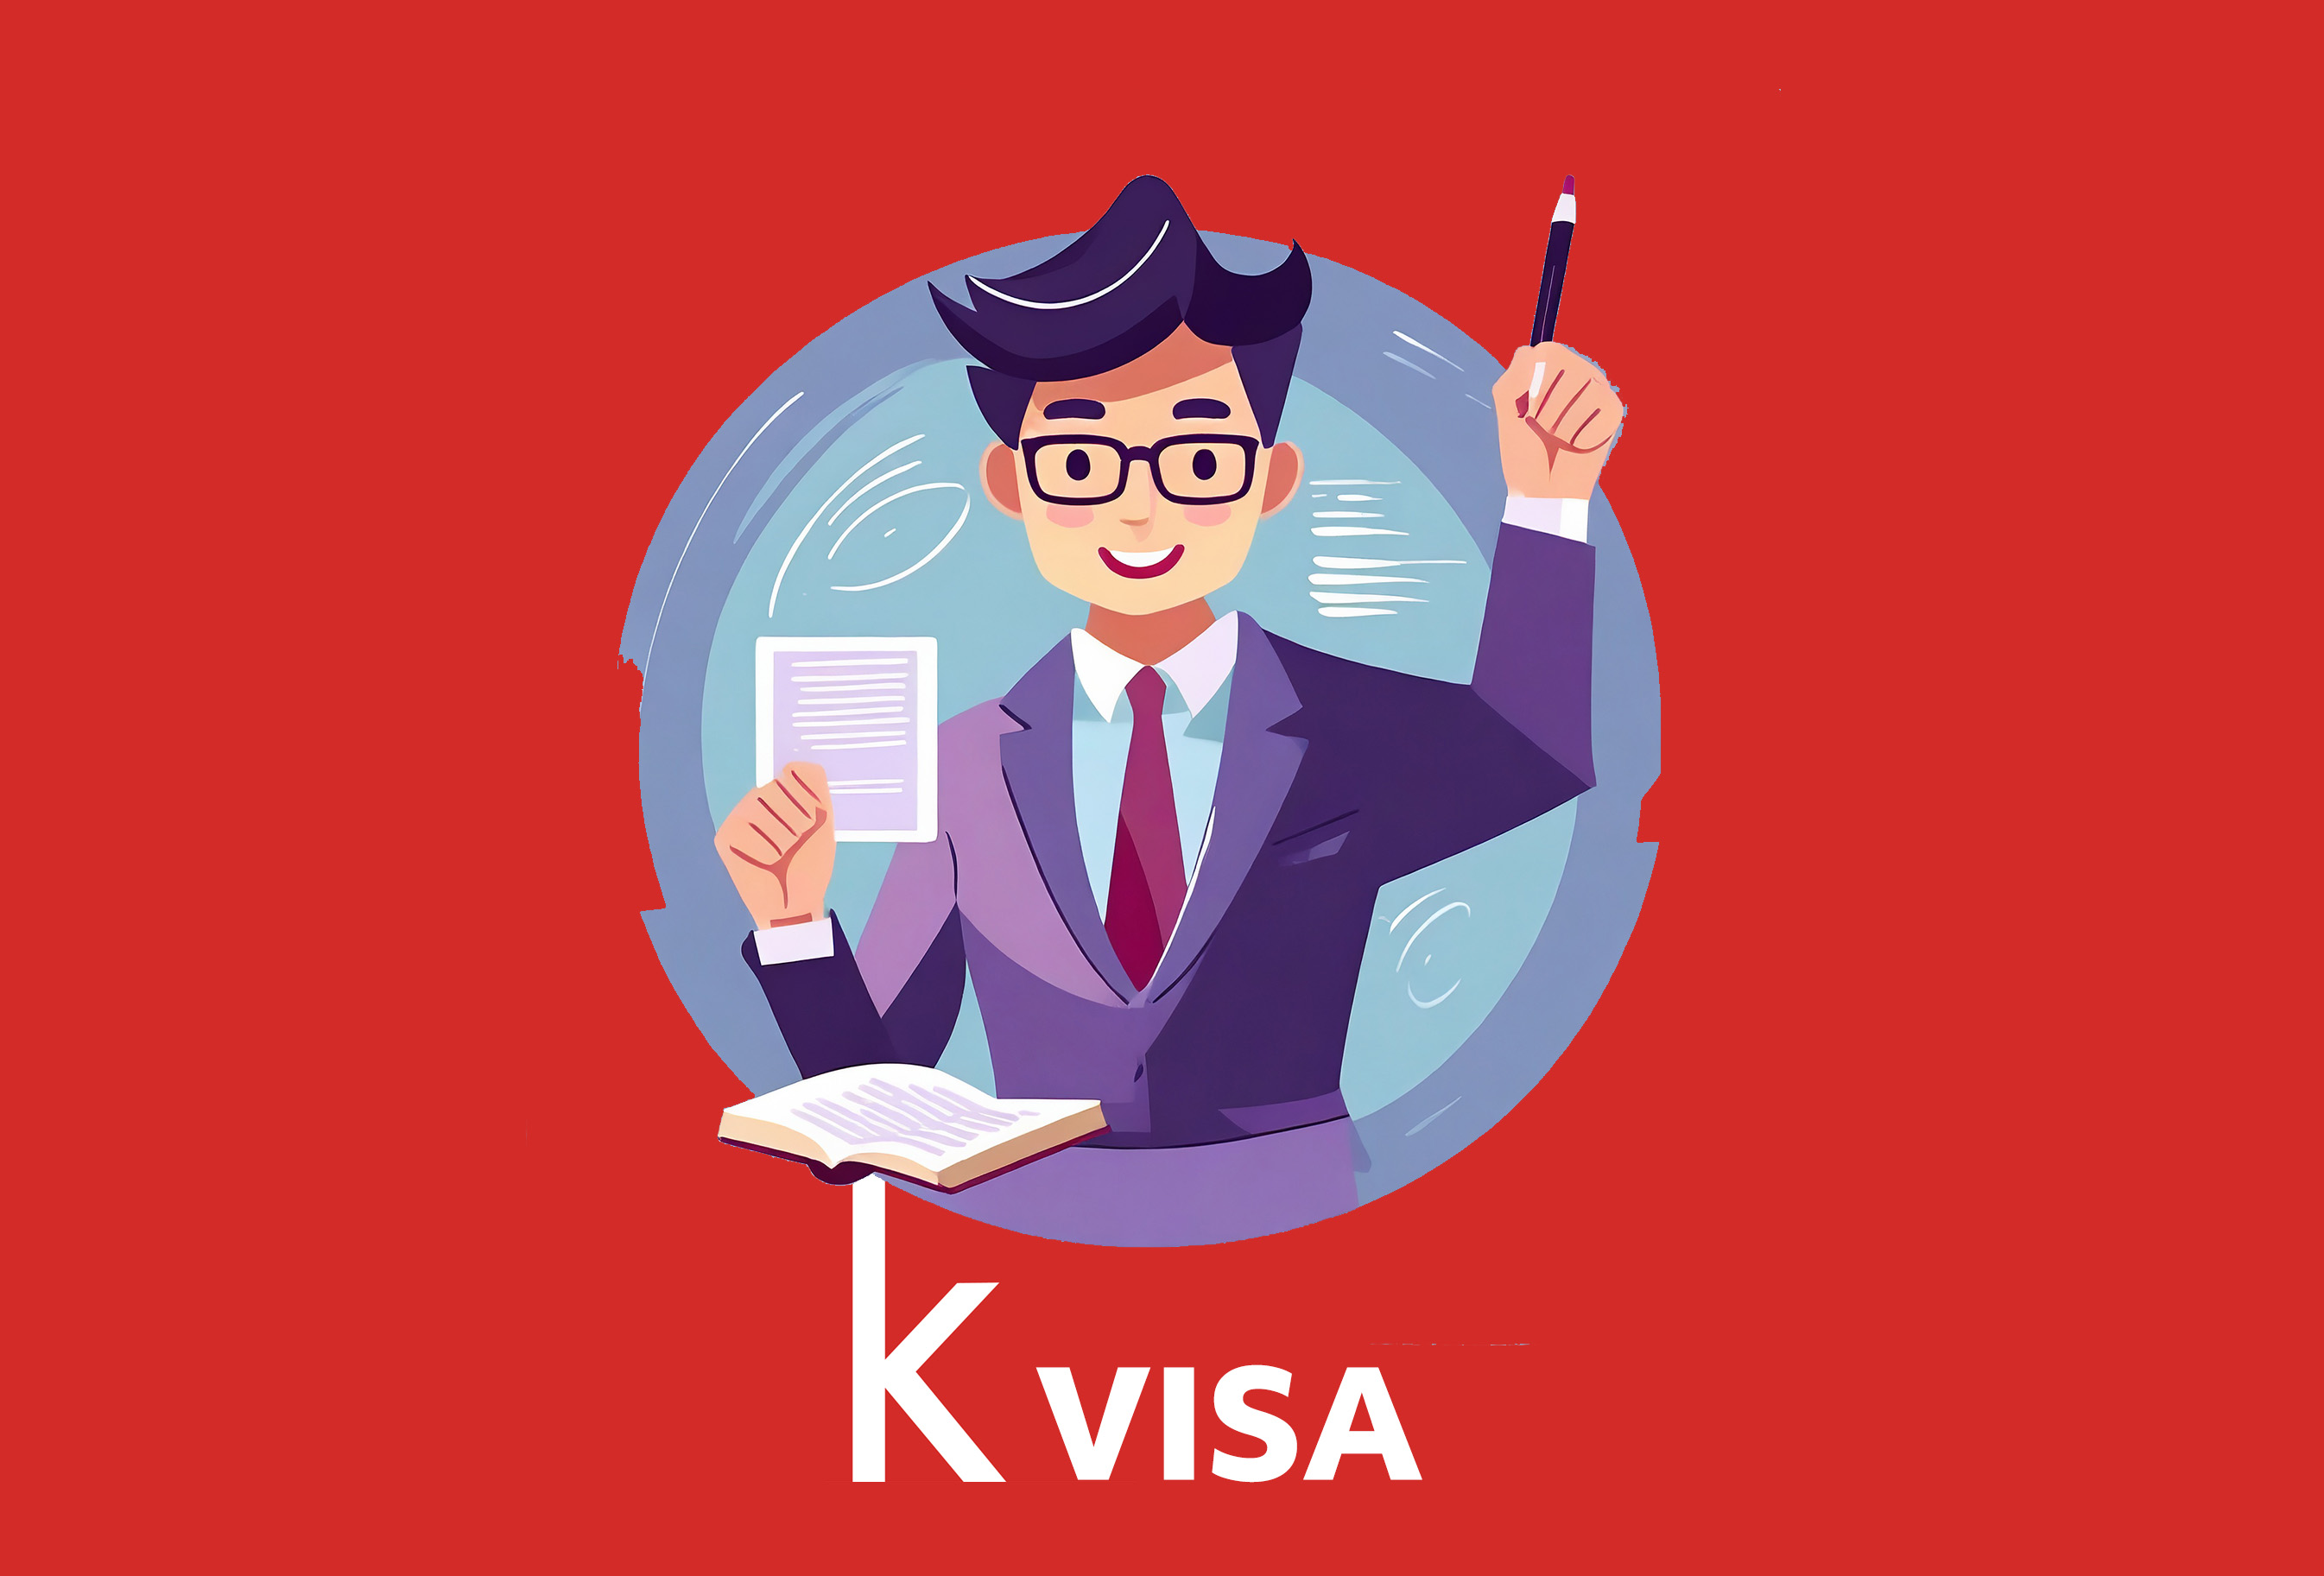 E1 Visa profile.jpg